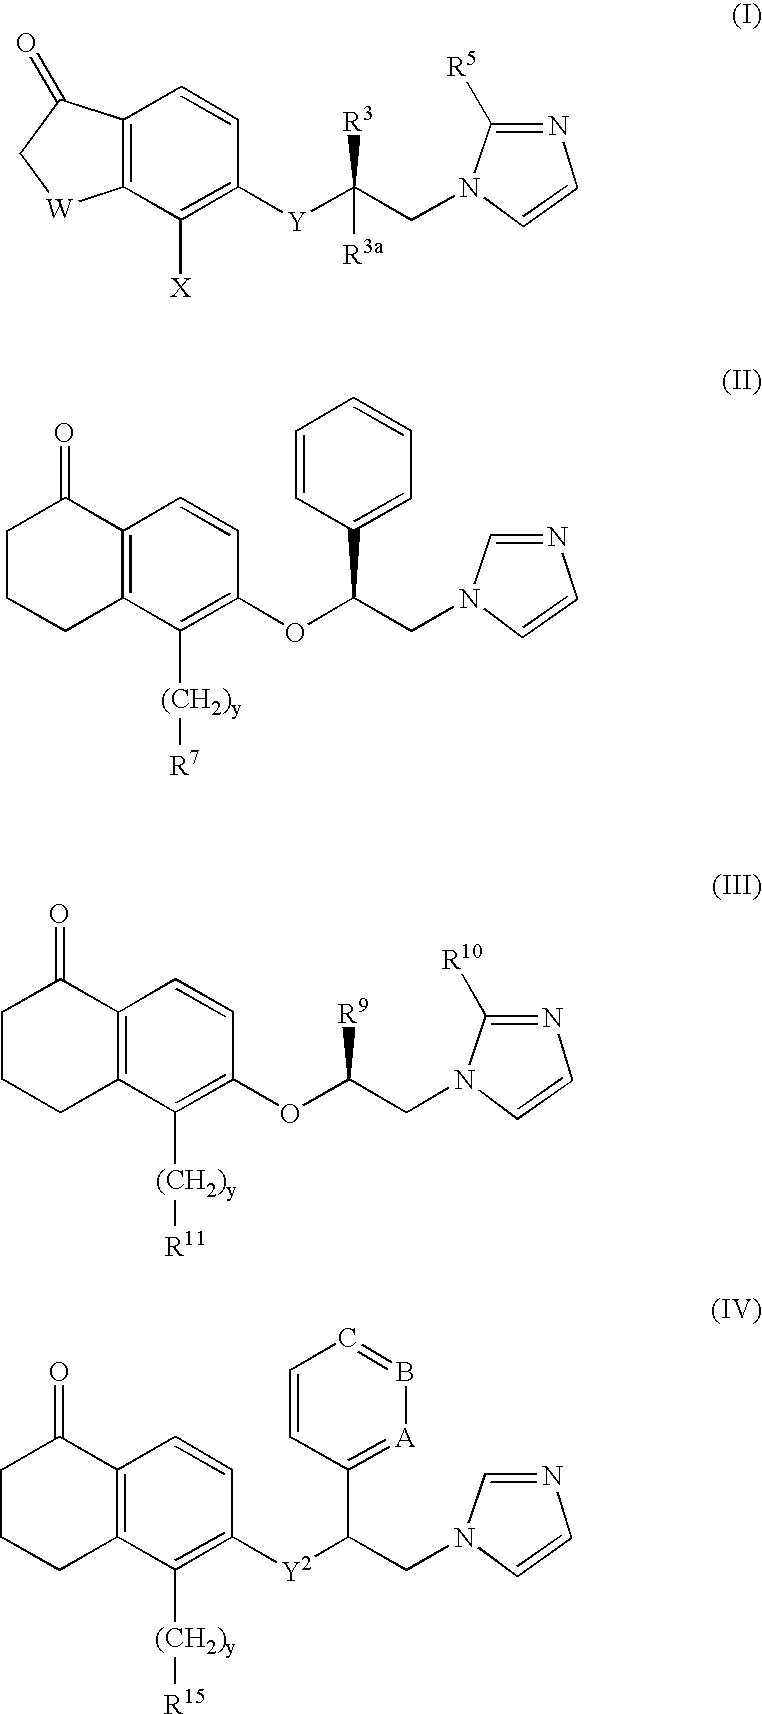 5- substituted tetralones as inhibitors of ras farnesyl trransferase